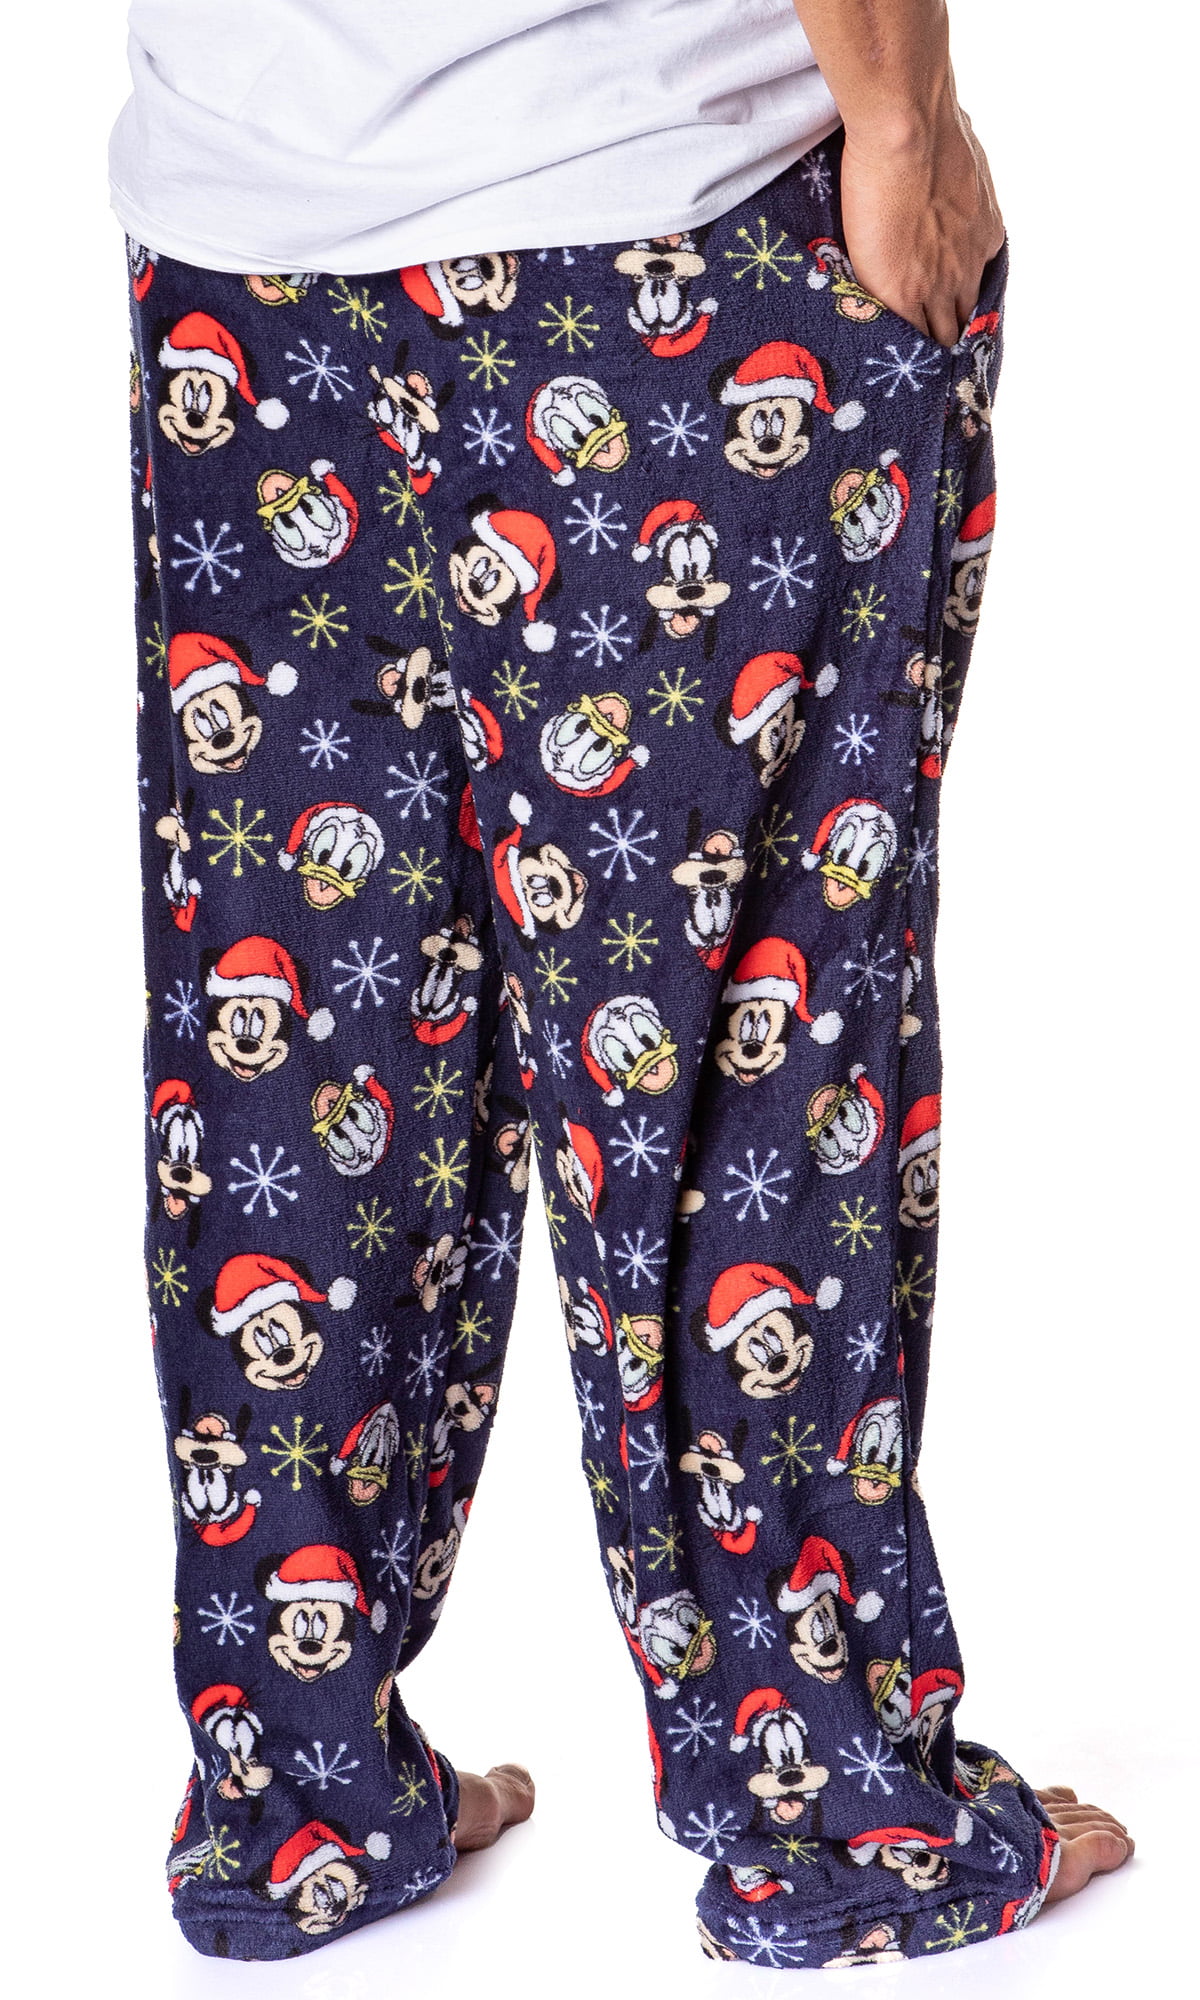 Best Family Christmas Pajamas Mickey Minnie Mouse & Goofy Jingle Bell -  Family Christmas Pajamas By Jenny